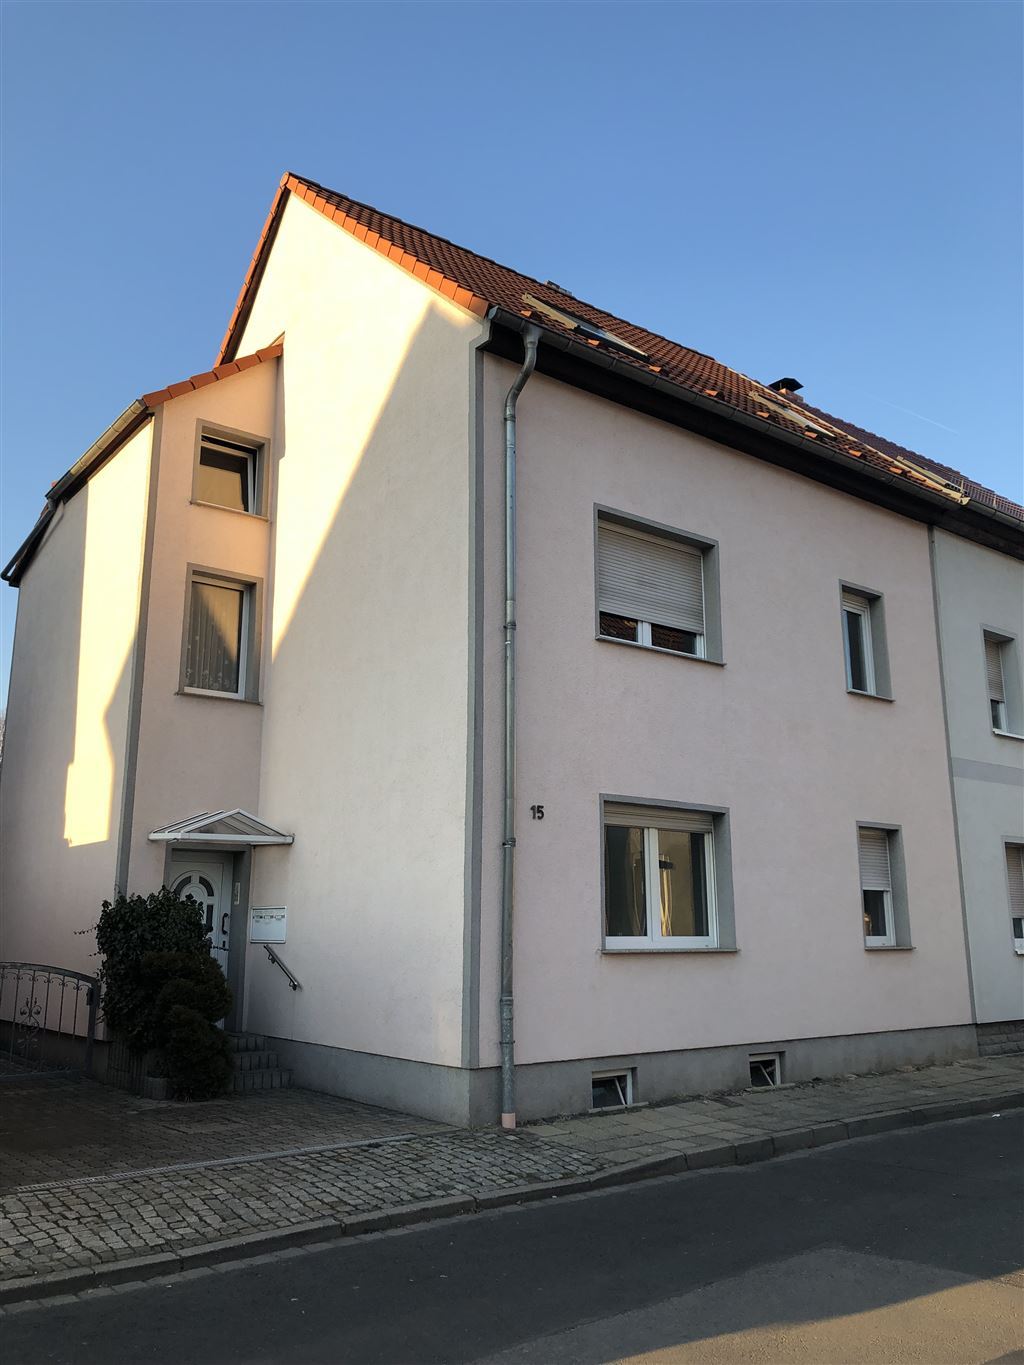 3 Familienhaus mit Nebengelass in Meuselwitz zentrumsnah zu verkaufen!